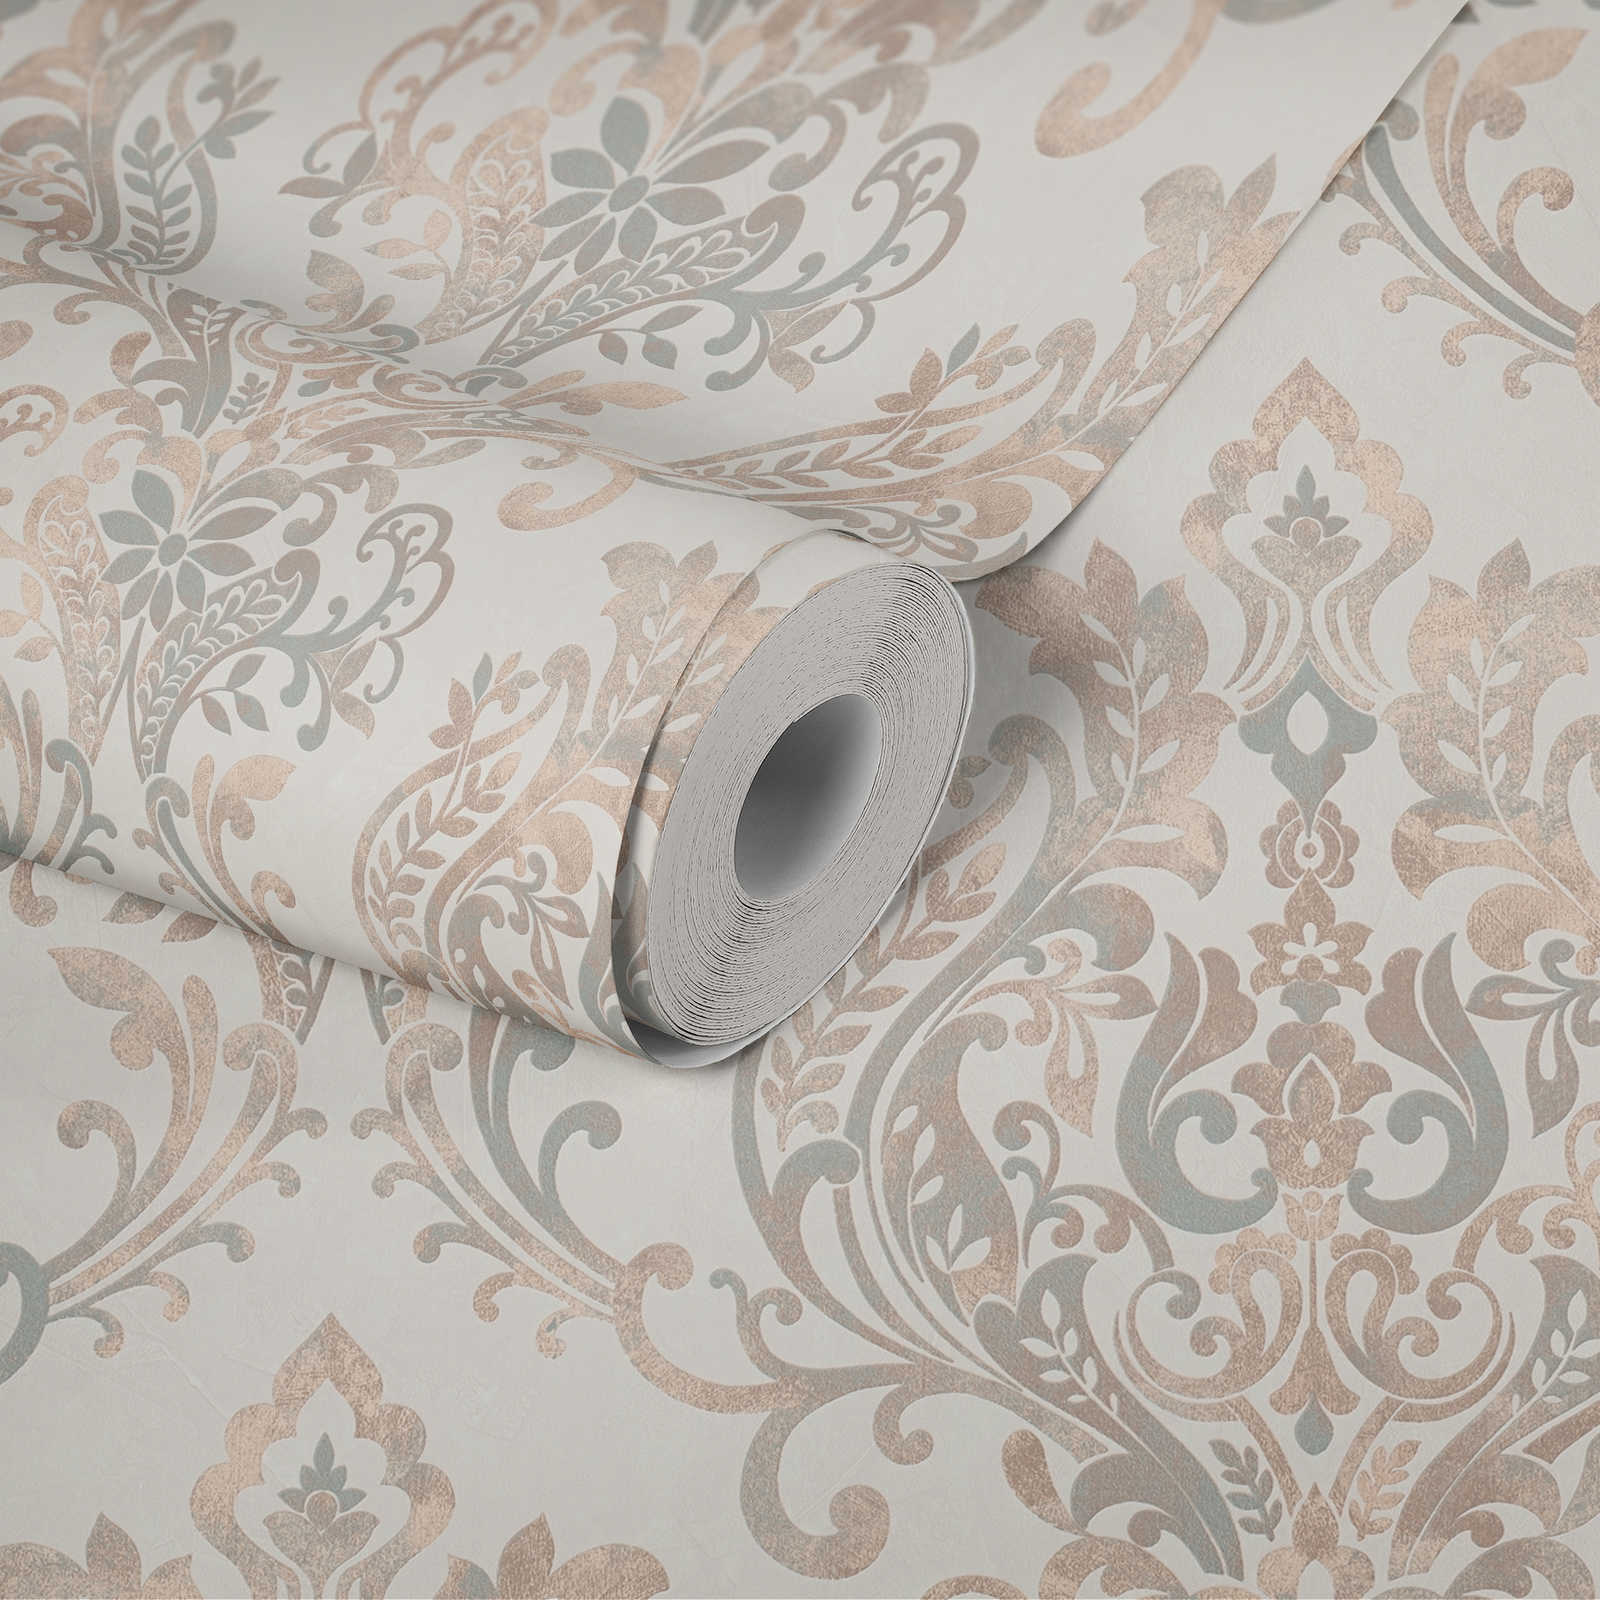             Self-adhesive wallpaper | ornament pattern with metallic effect - beige, cream
        